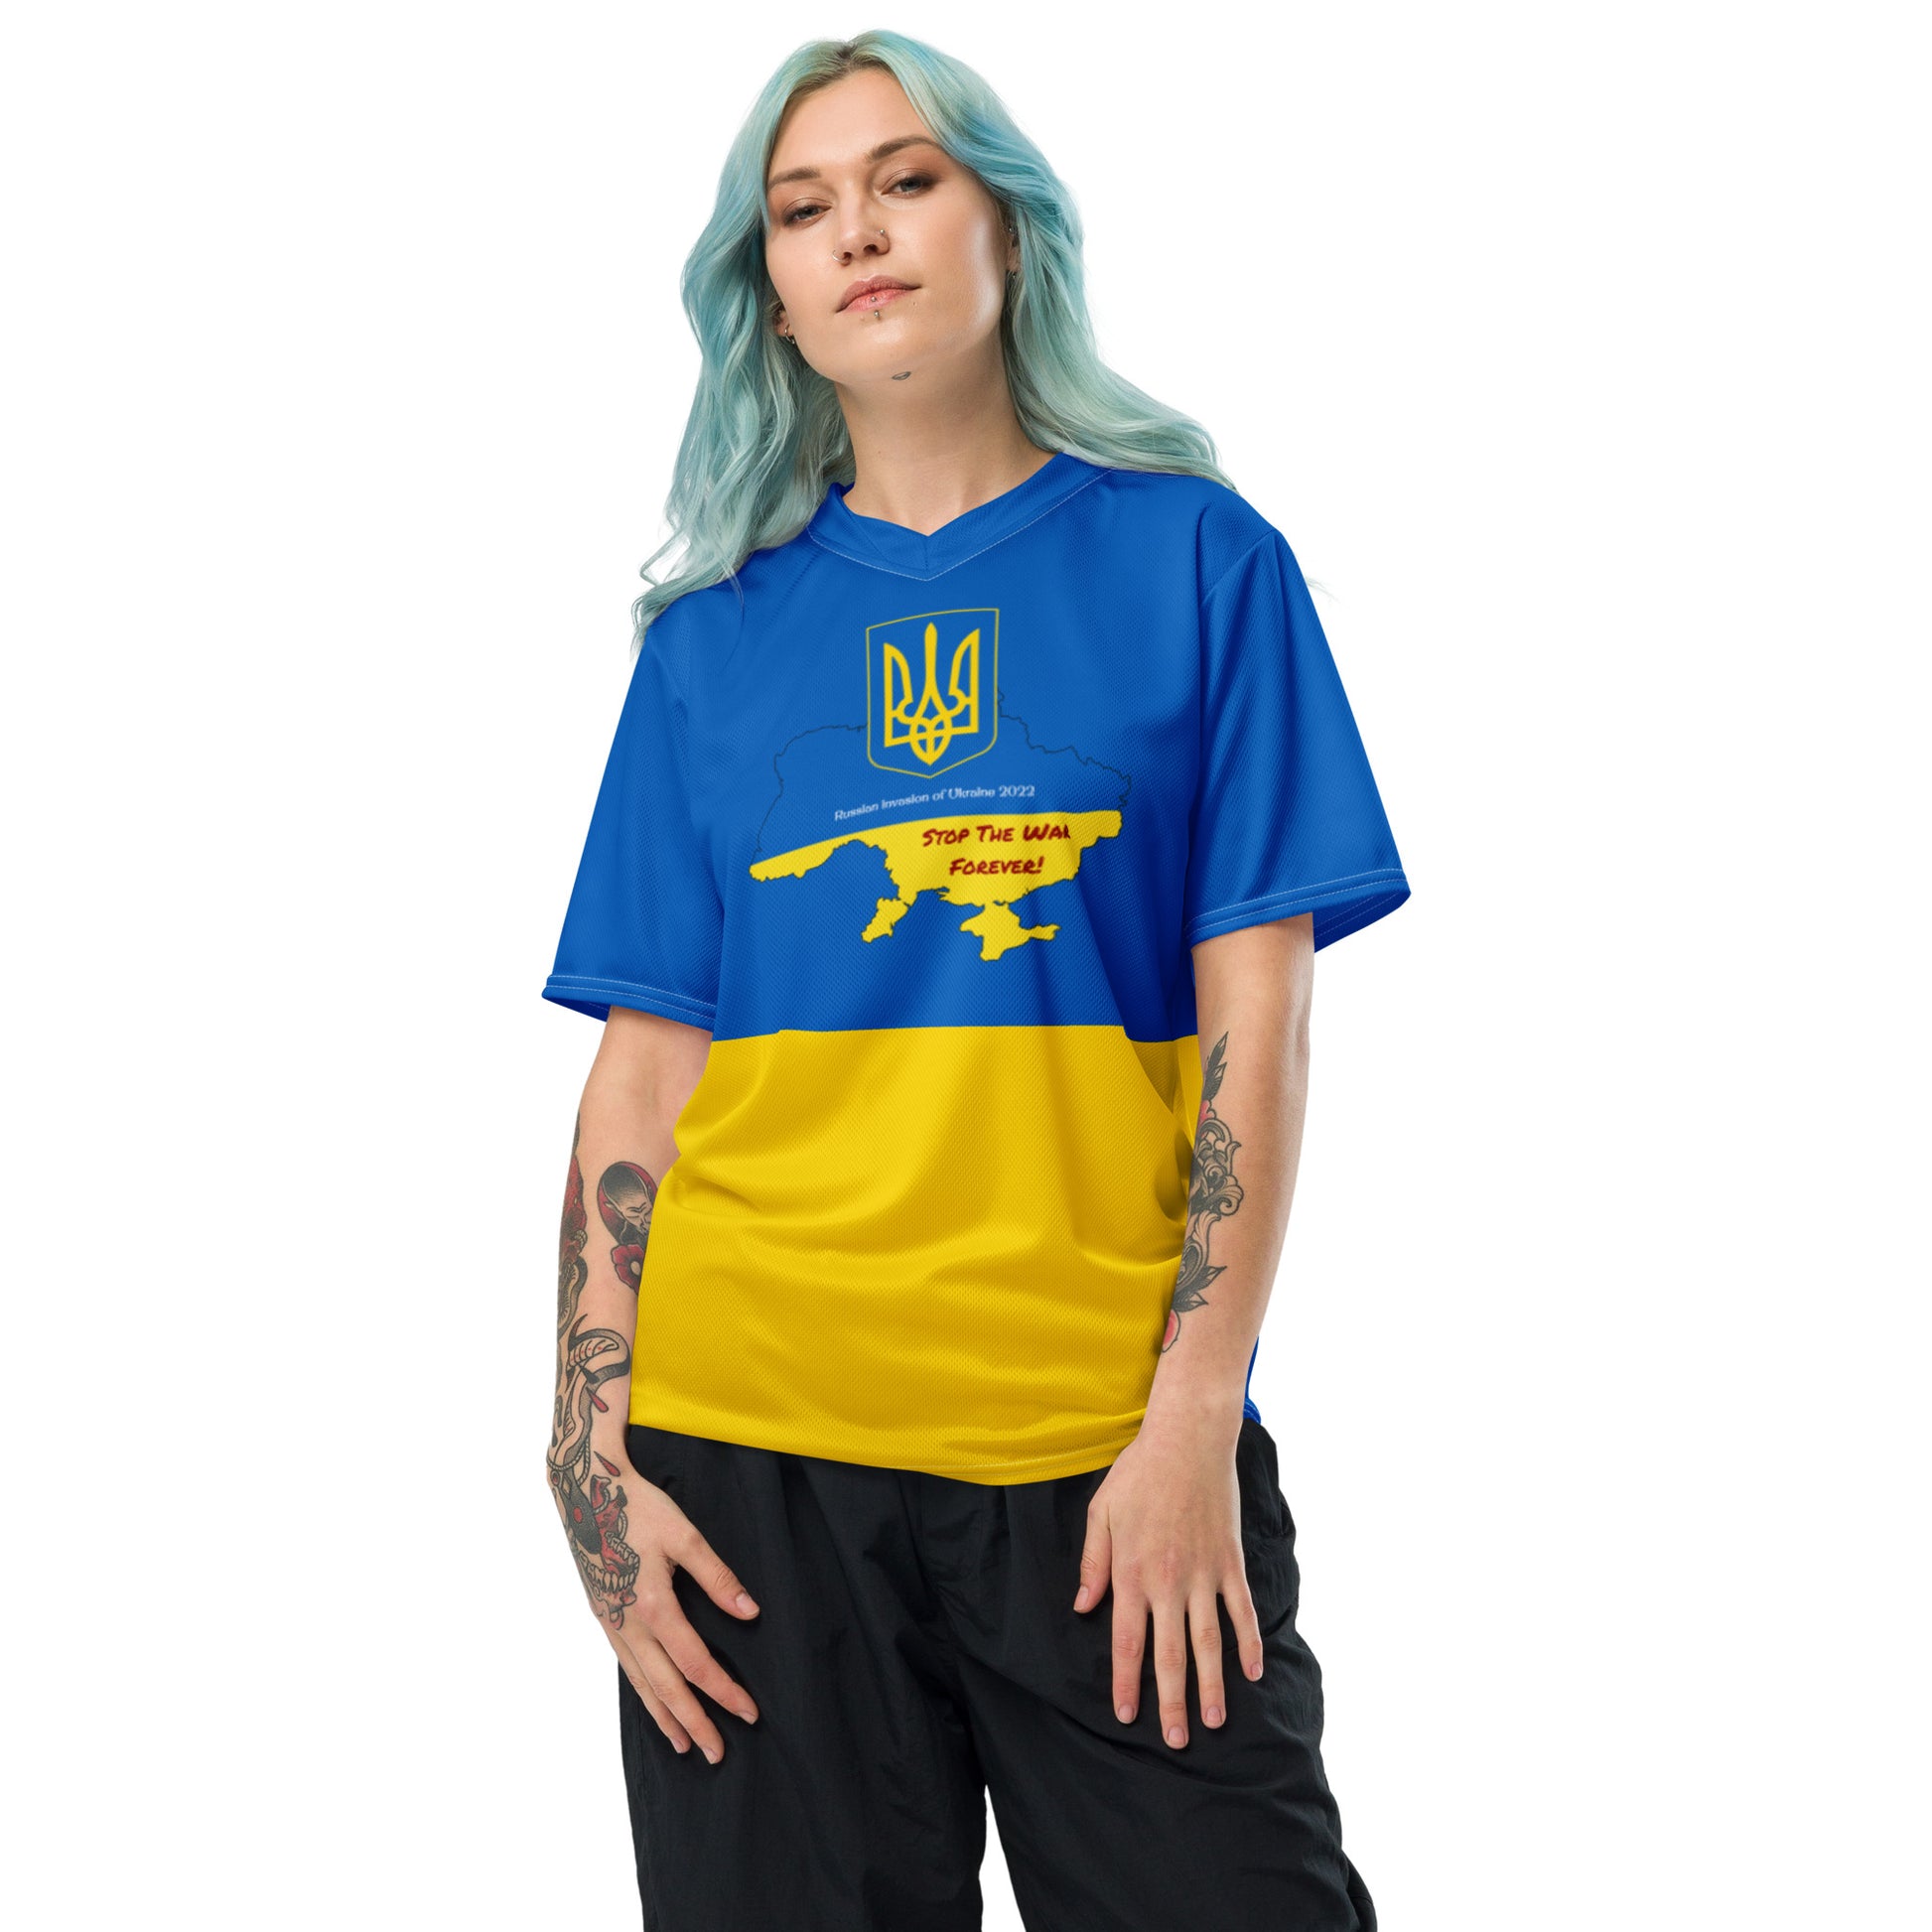 Ukraine Flag Recycled Polyester Unisex Sports Jersey Sizes 2XS - 6XL